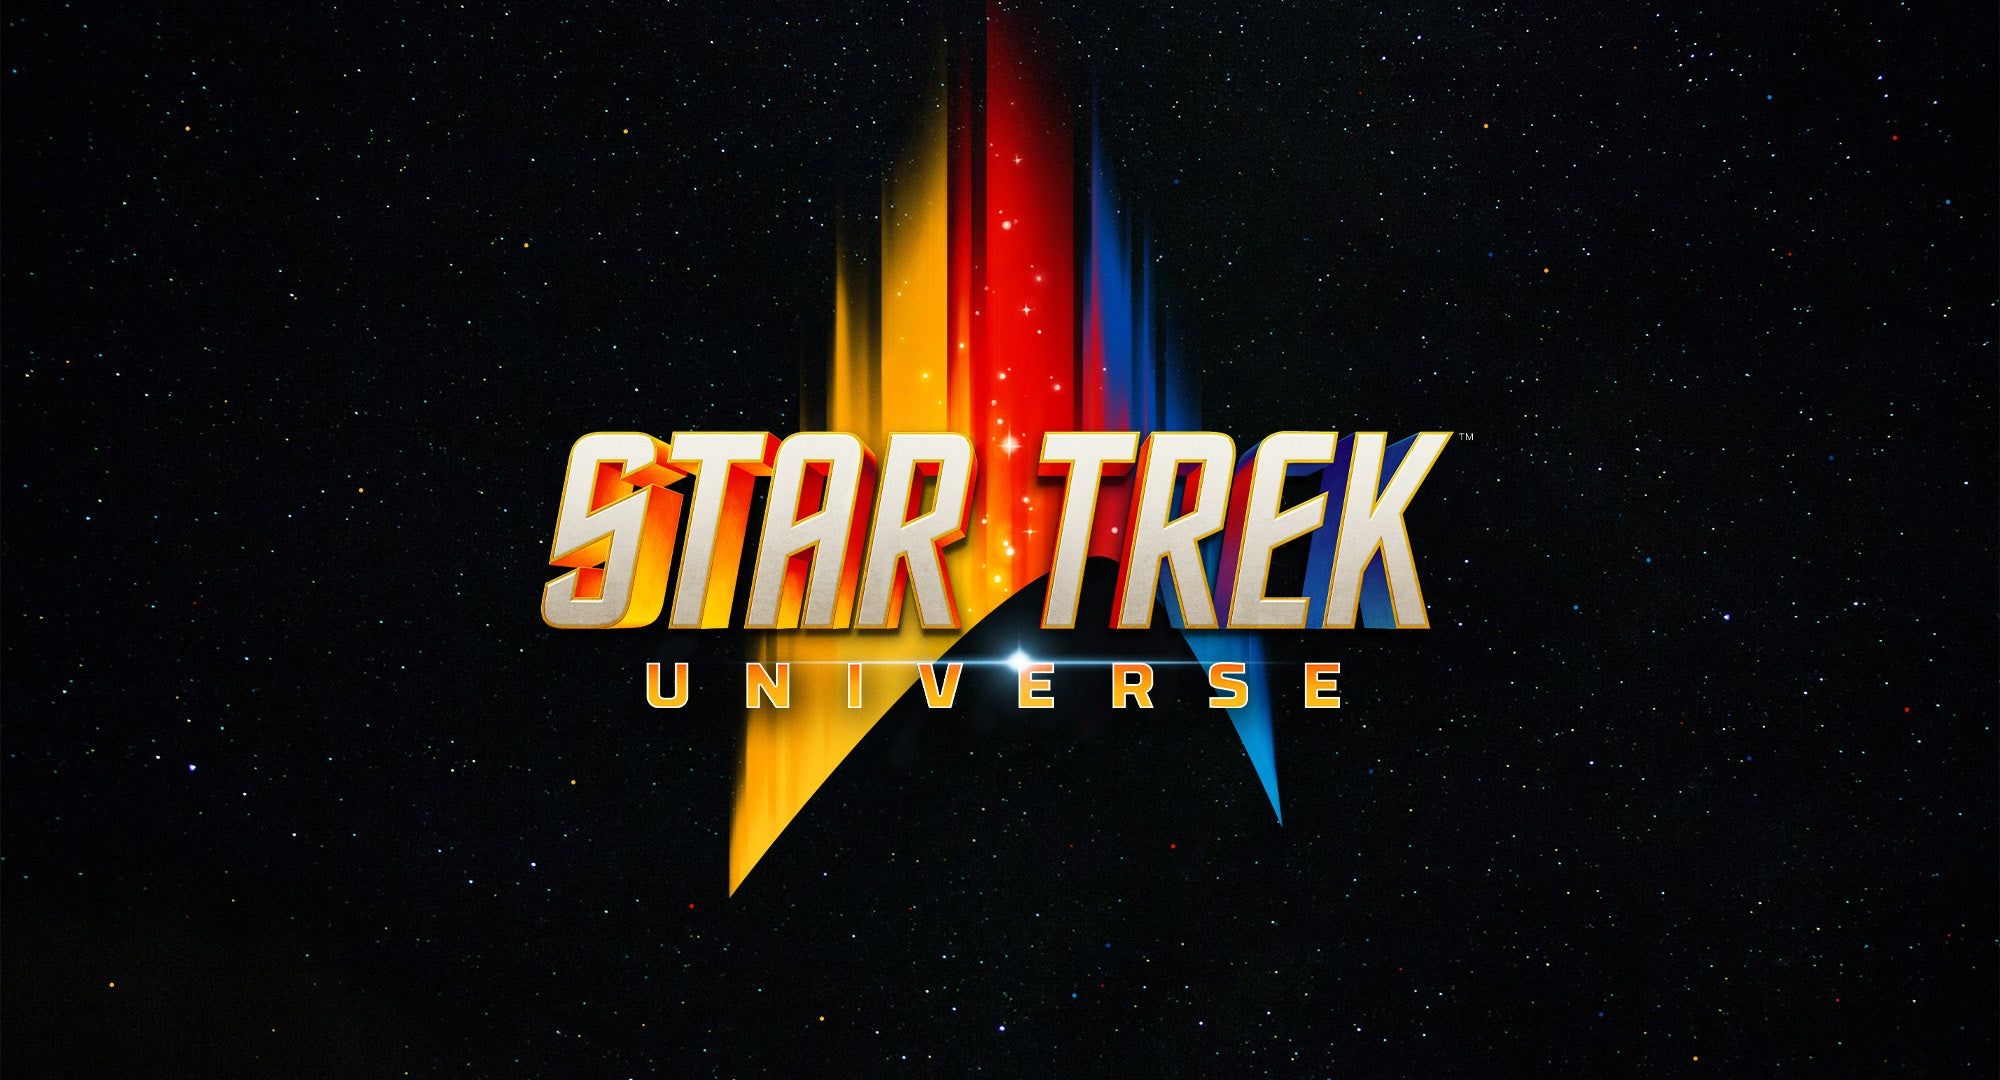 The Star Trek Universe moves forward